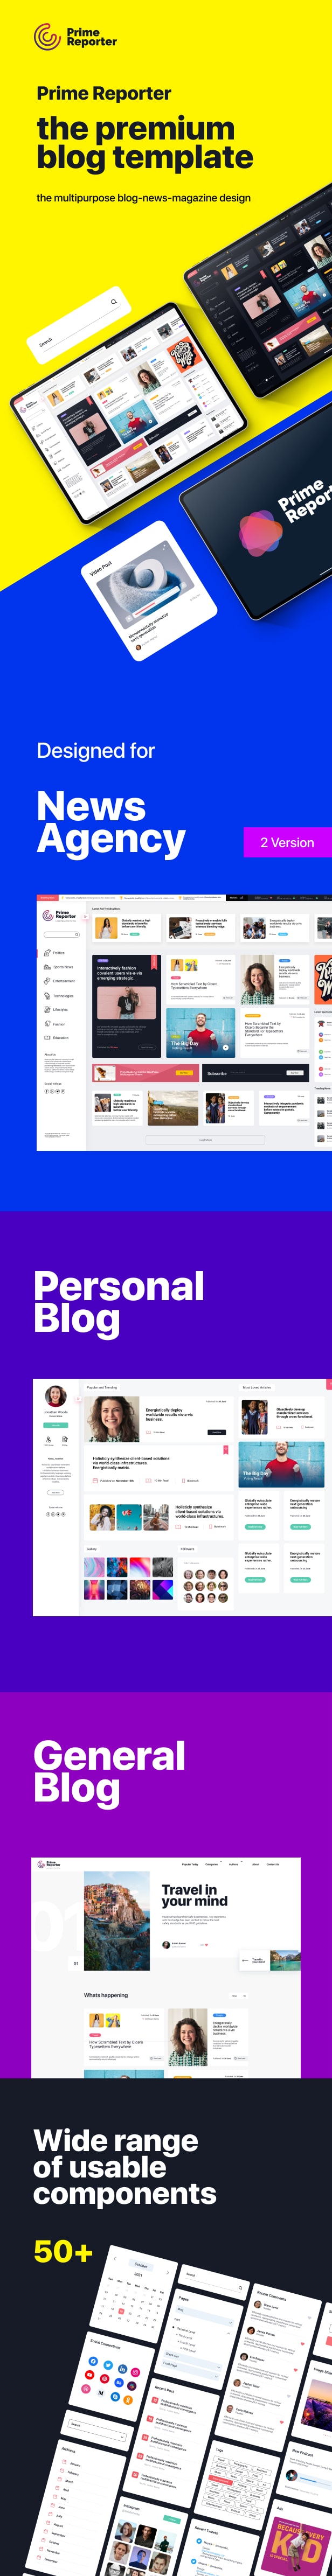 Prime Reporter | News Agency-Personal Blogging-Magazine Figma Web UI Template - 1